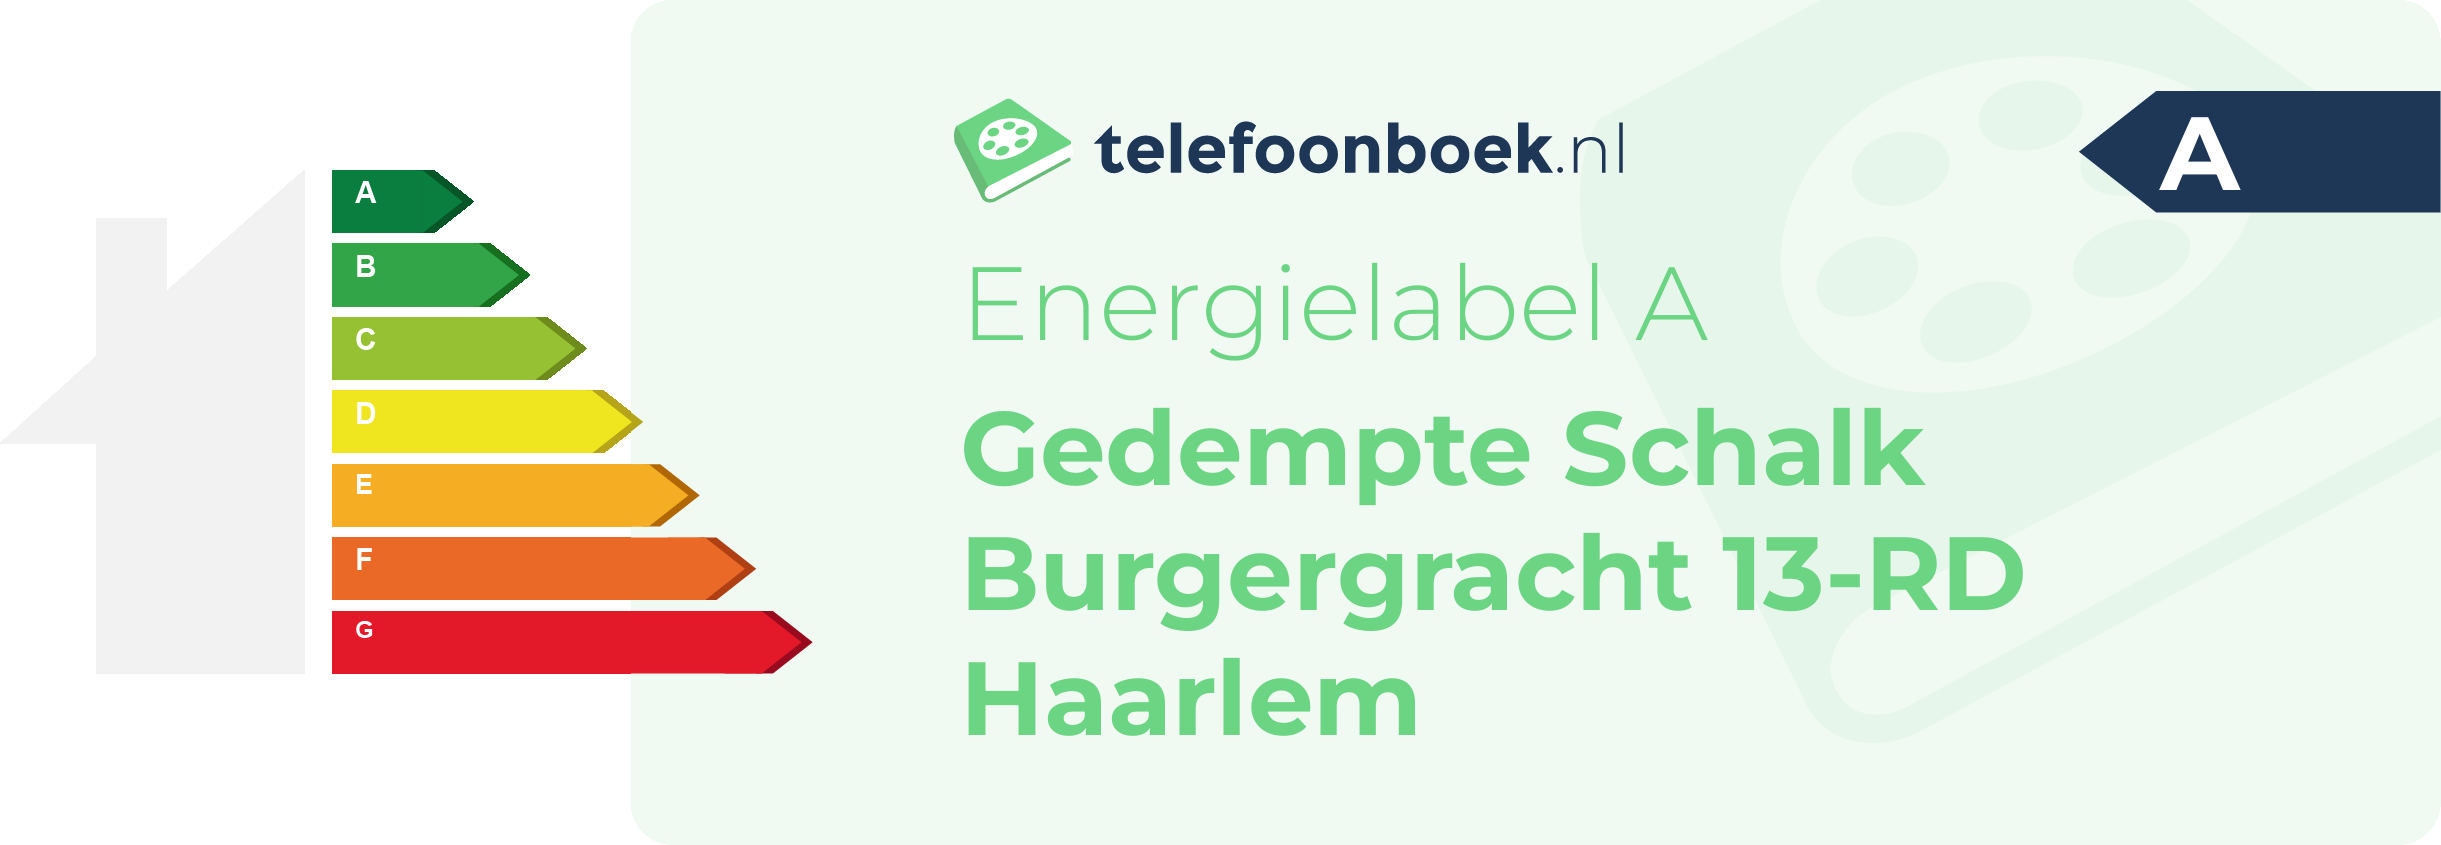 Energielabel Gedempte Schalk Burgergracht 13-RD Haarlem